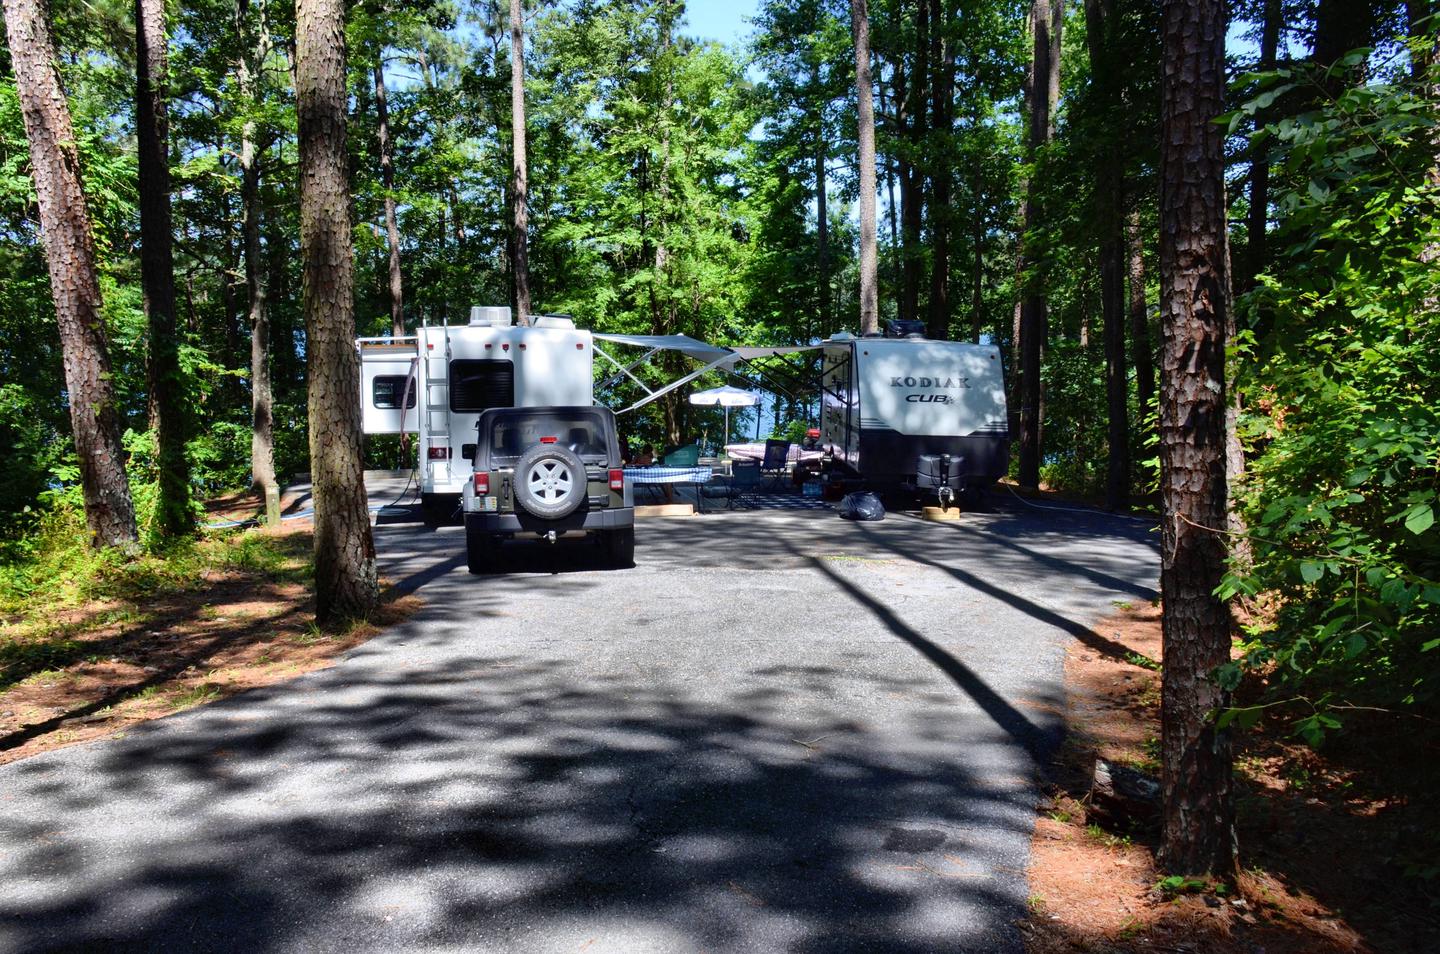 Double site, wide campsite view.Old 41 #3, campsite 028 - 029.